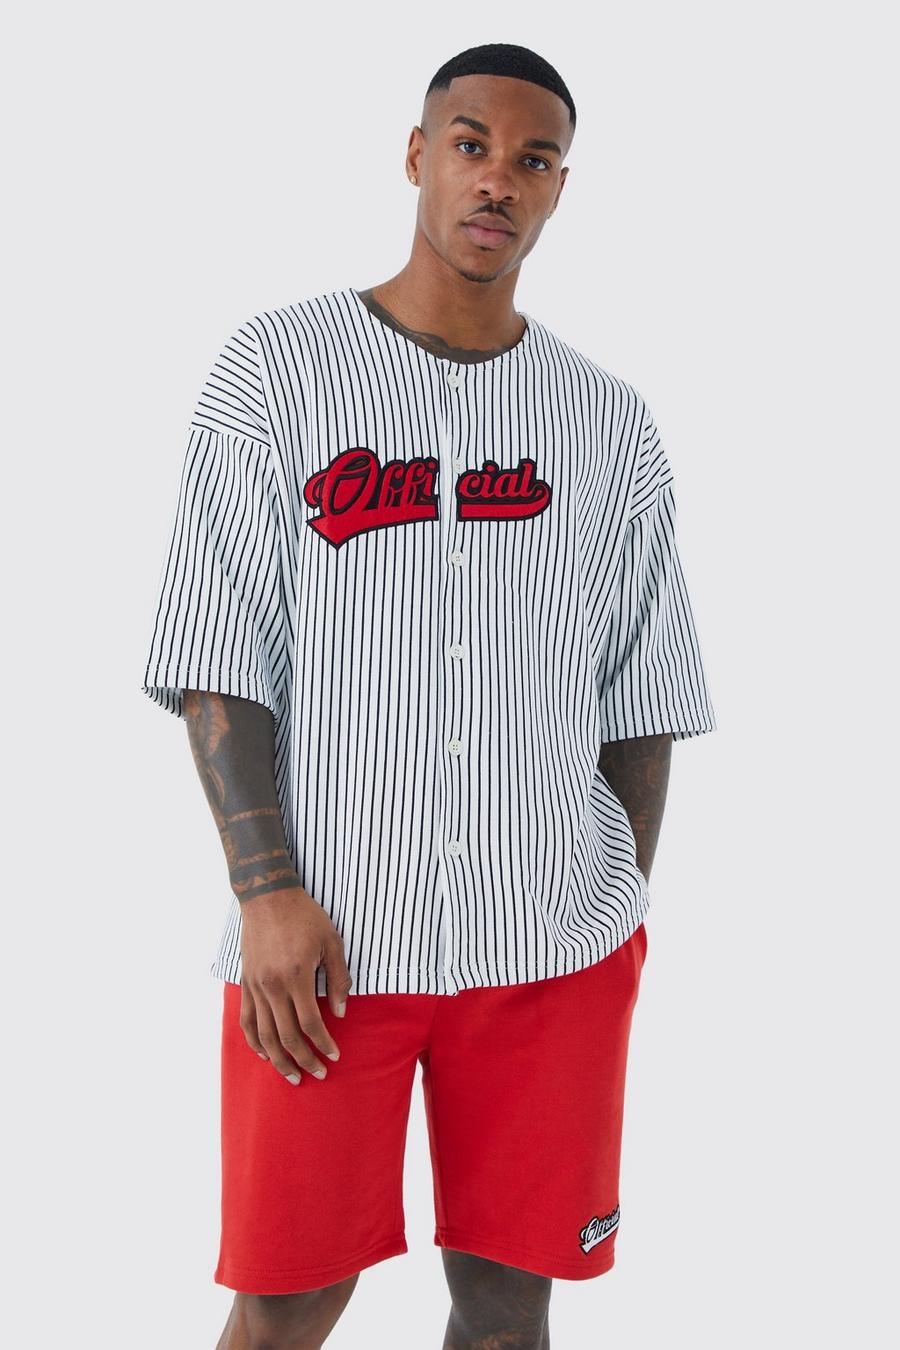 Baseball Style Jersey, Cotton, Chicago Bulls, Pinstriped Fabric